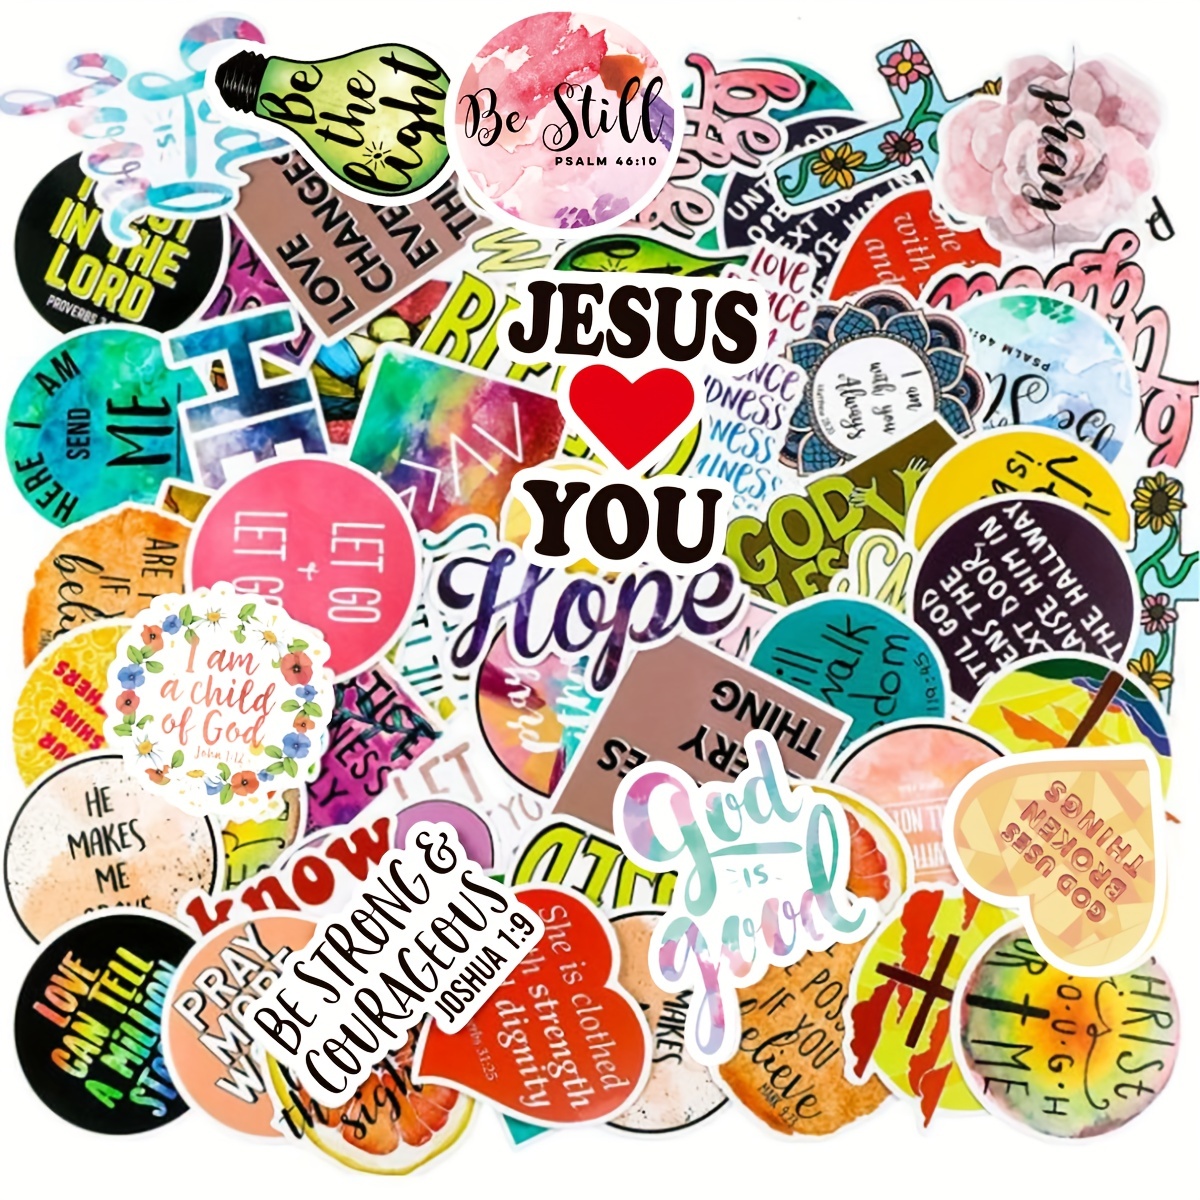 God is Good Stickers  God sticker, Faith stickers, Christian stickers